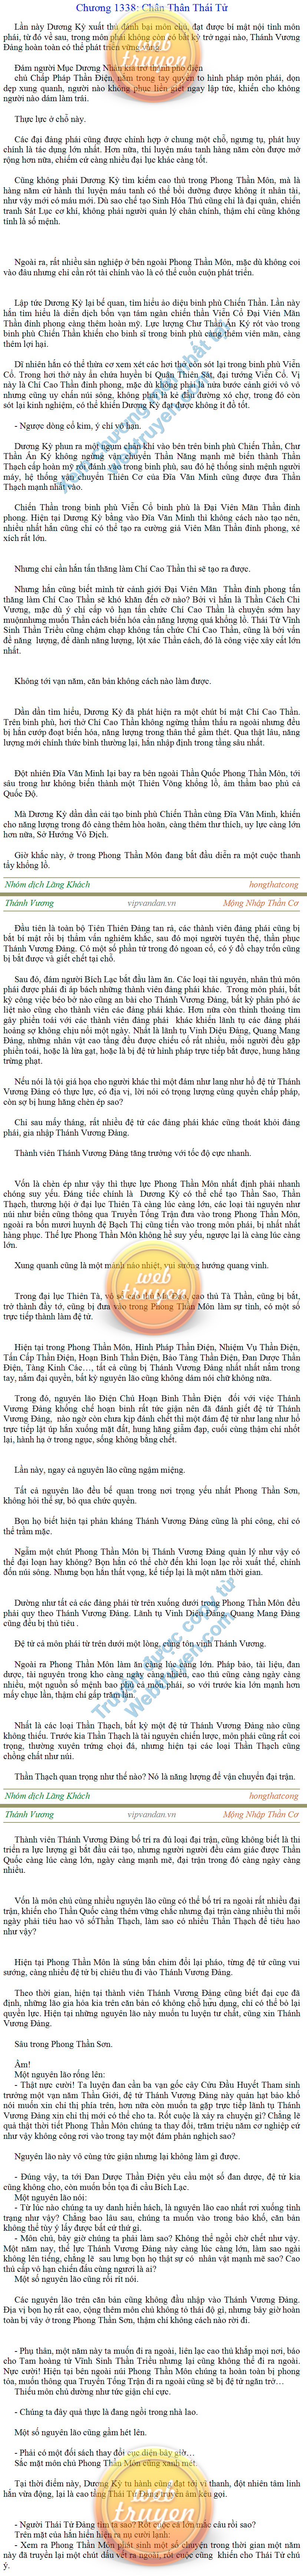 Thanh-vuong-1338.png